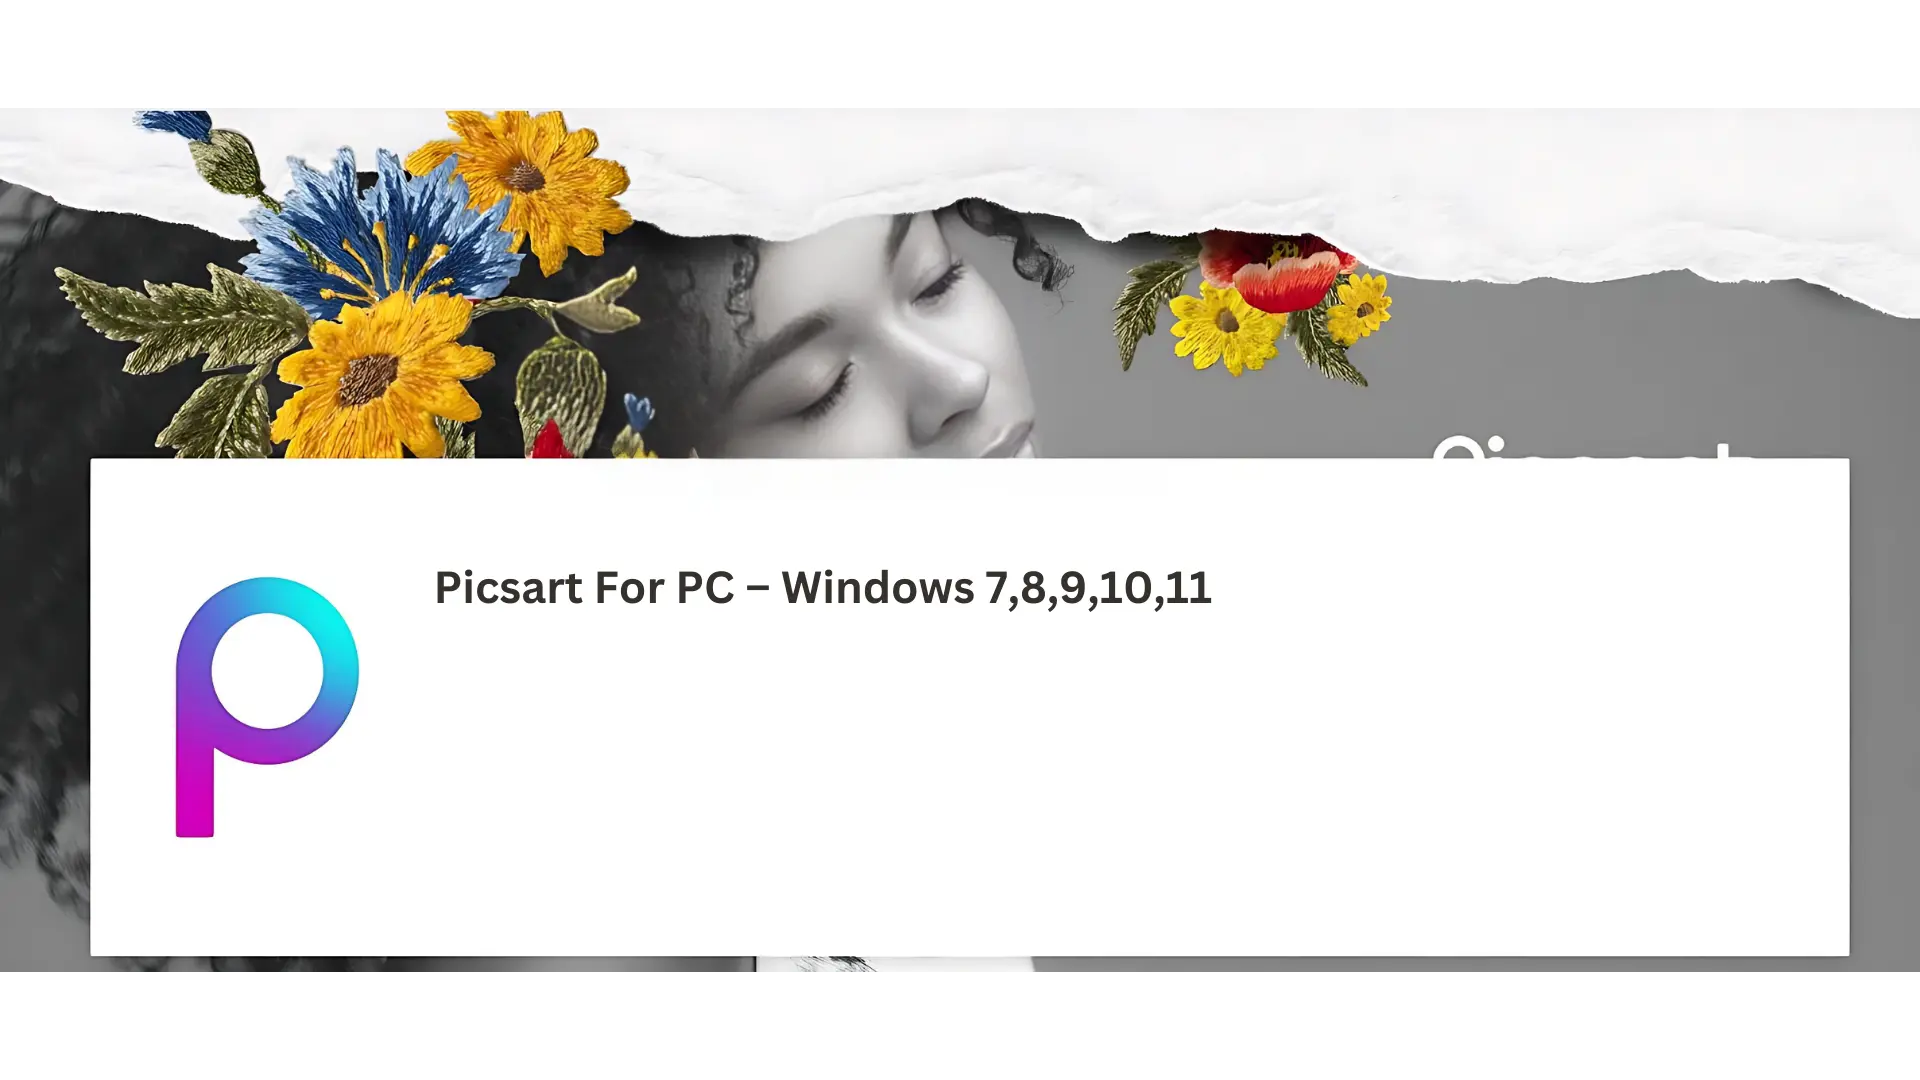 Picsart For PC – Windows 7,8,9,10,11